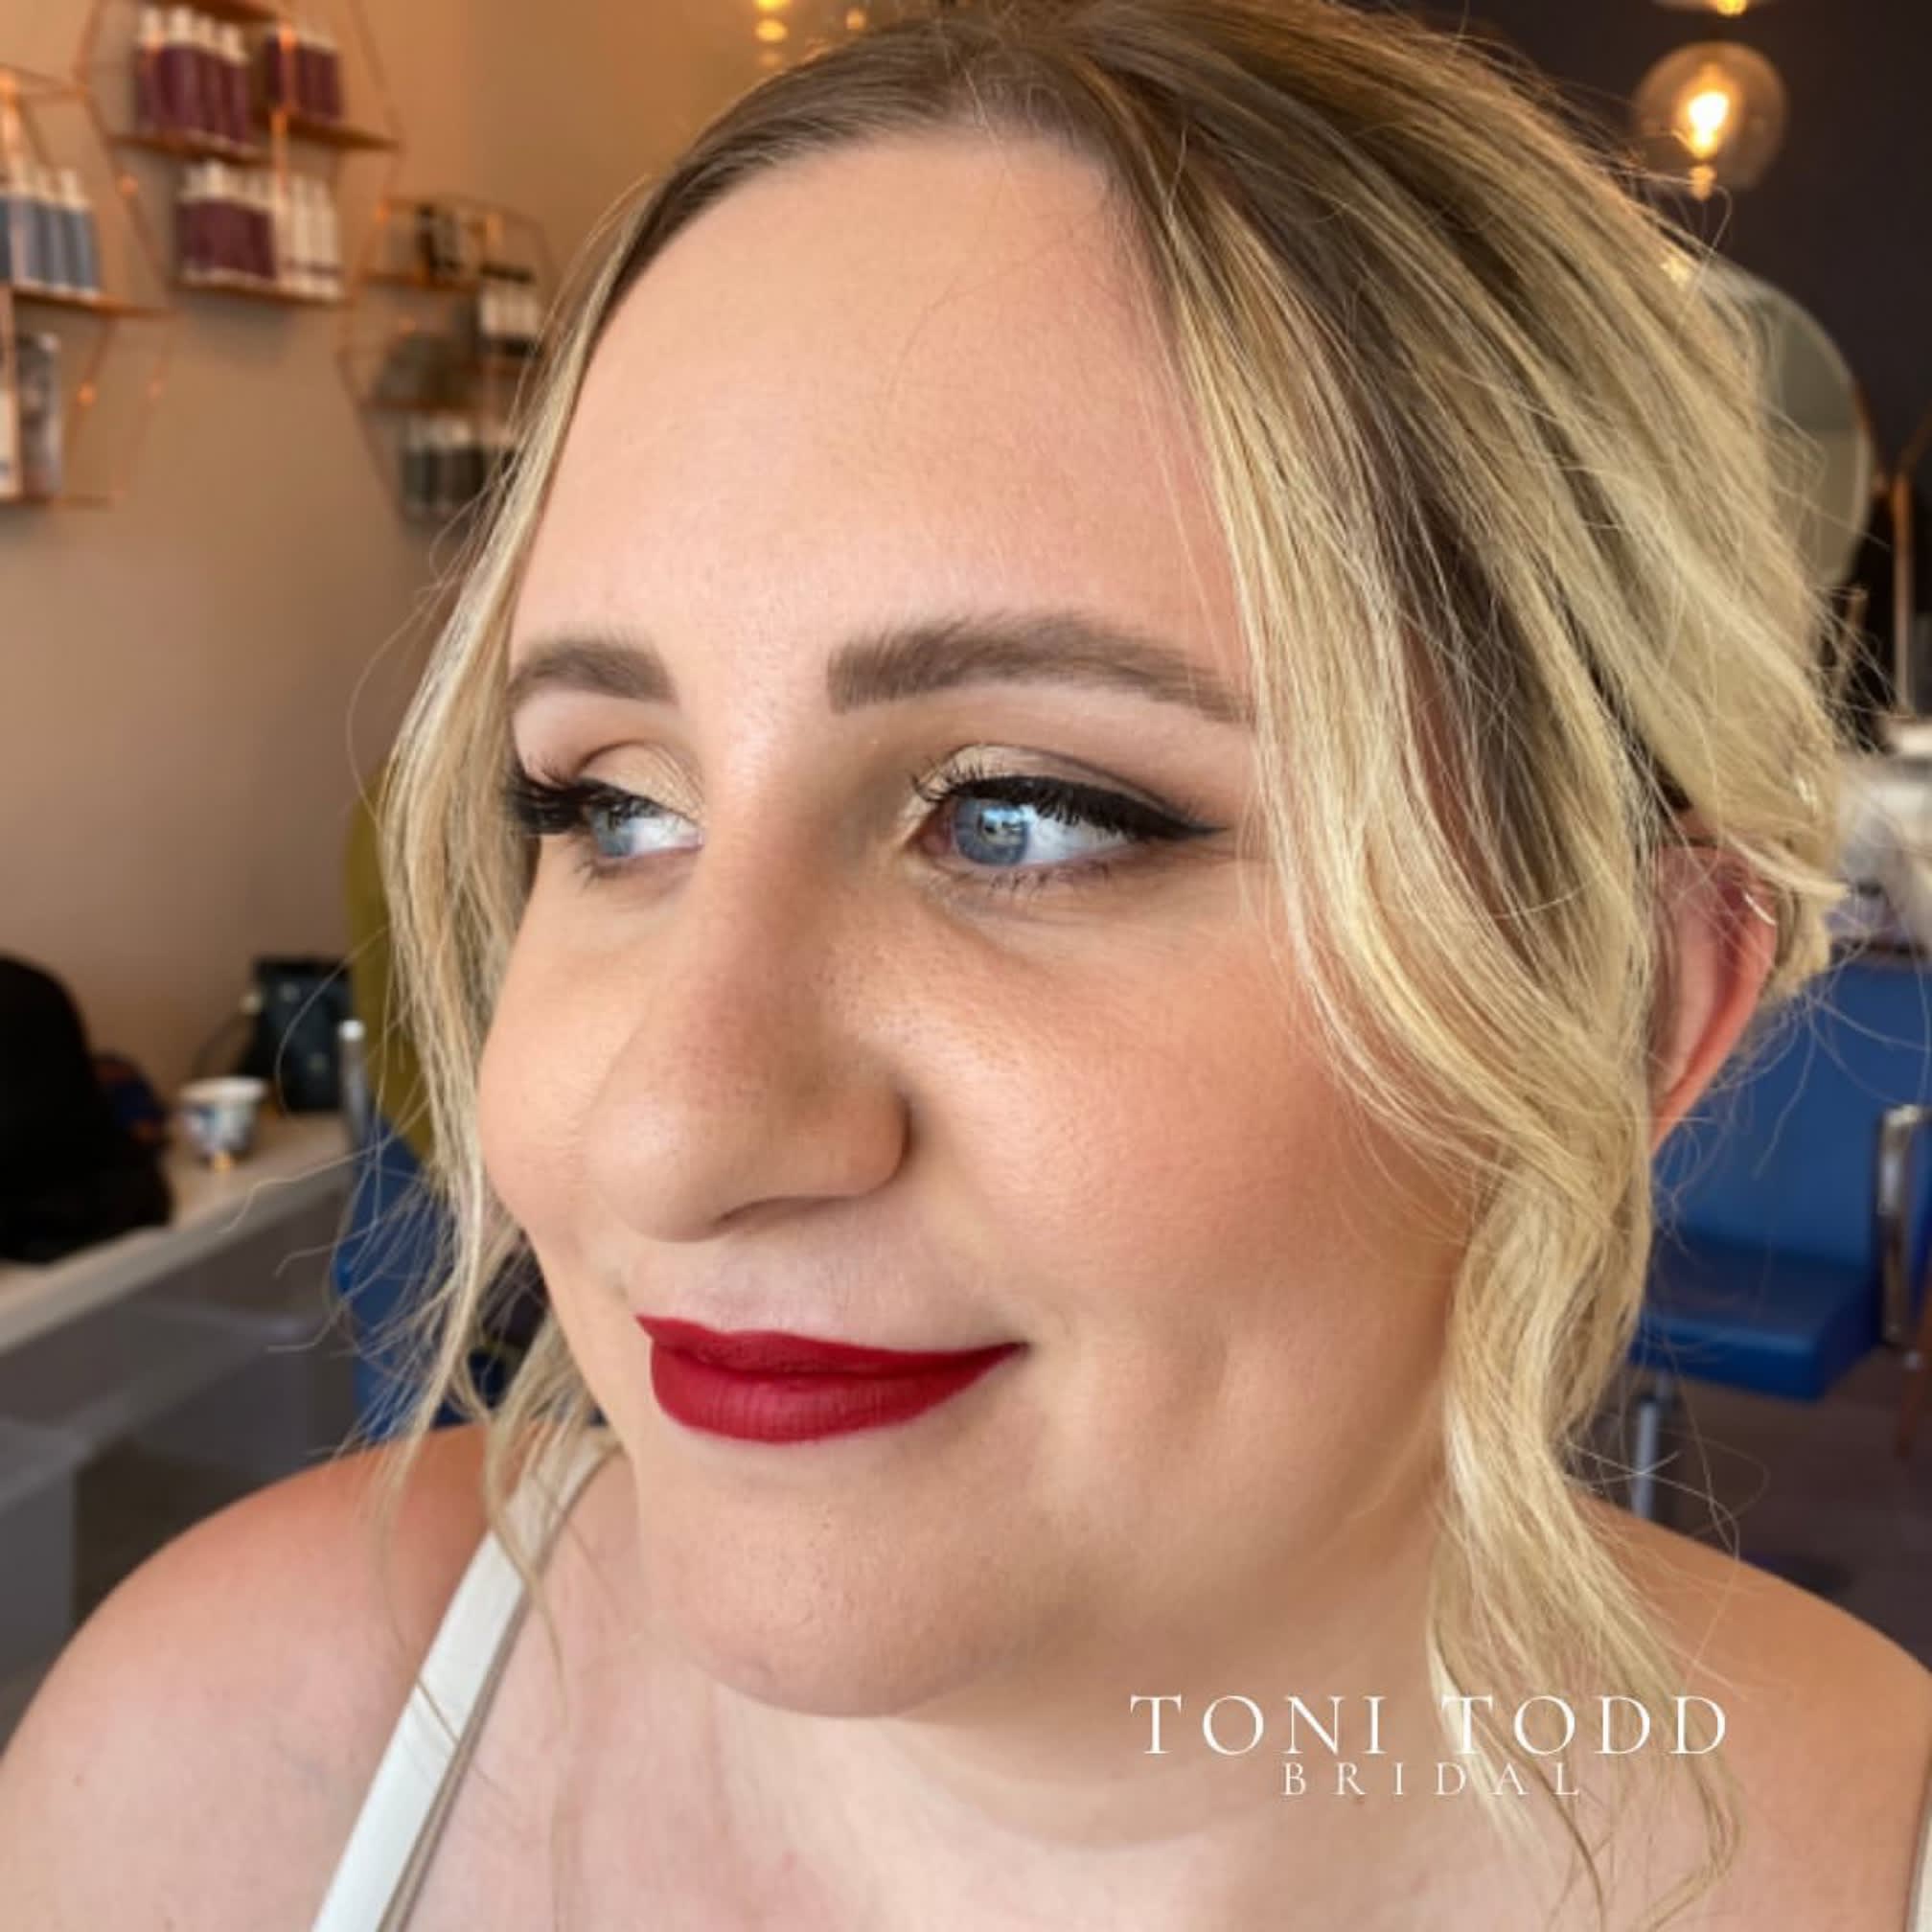 Toni Todd Boutique. Wedding Hair And Makeup. Hairdressing Salon Littlehampton 01903 446399